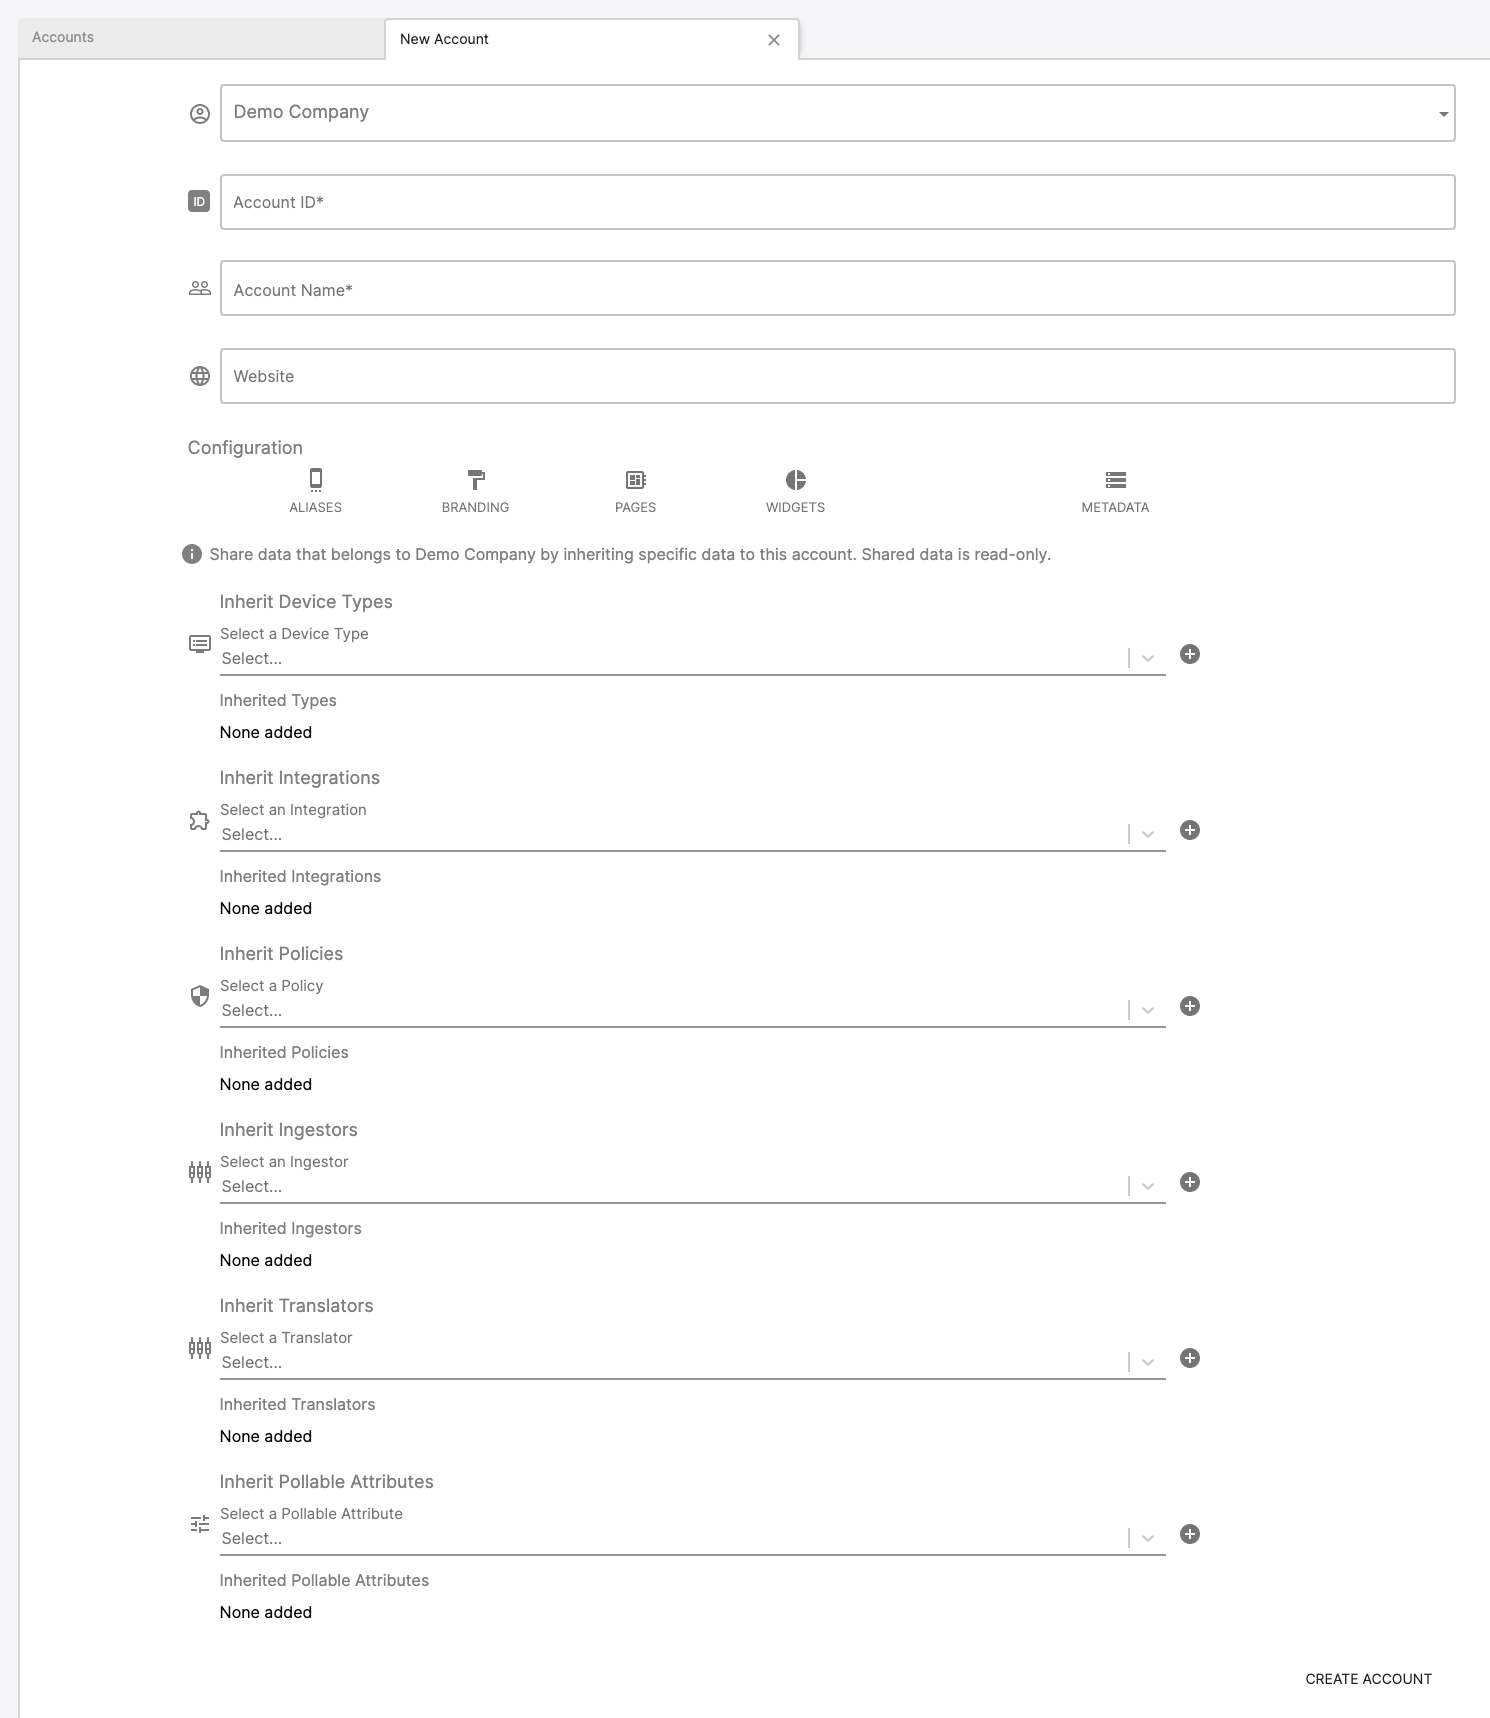 Account Creation - Sub-Account Data Sharing Options Tab